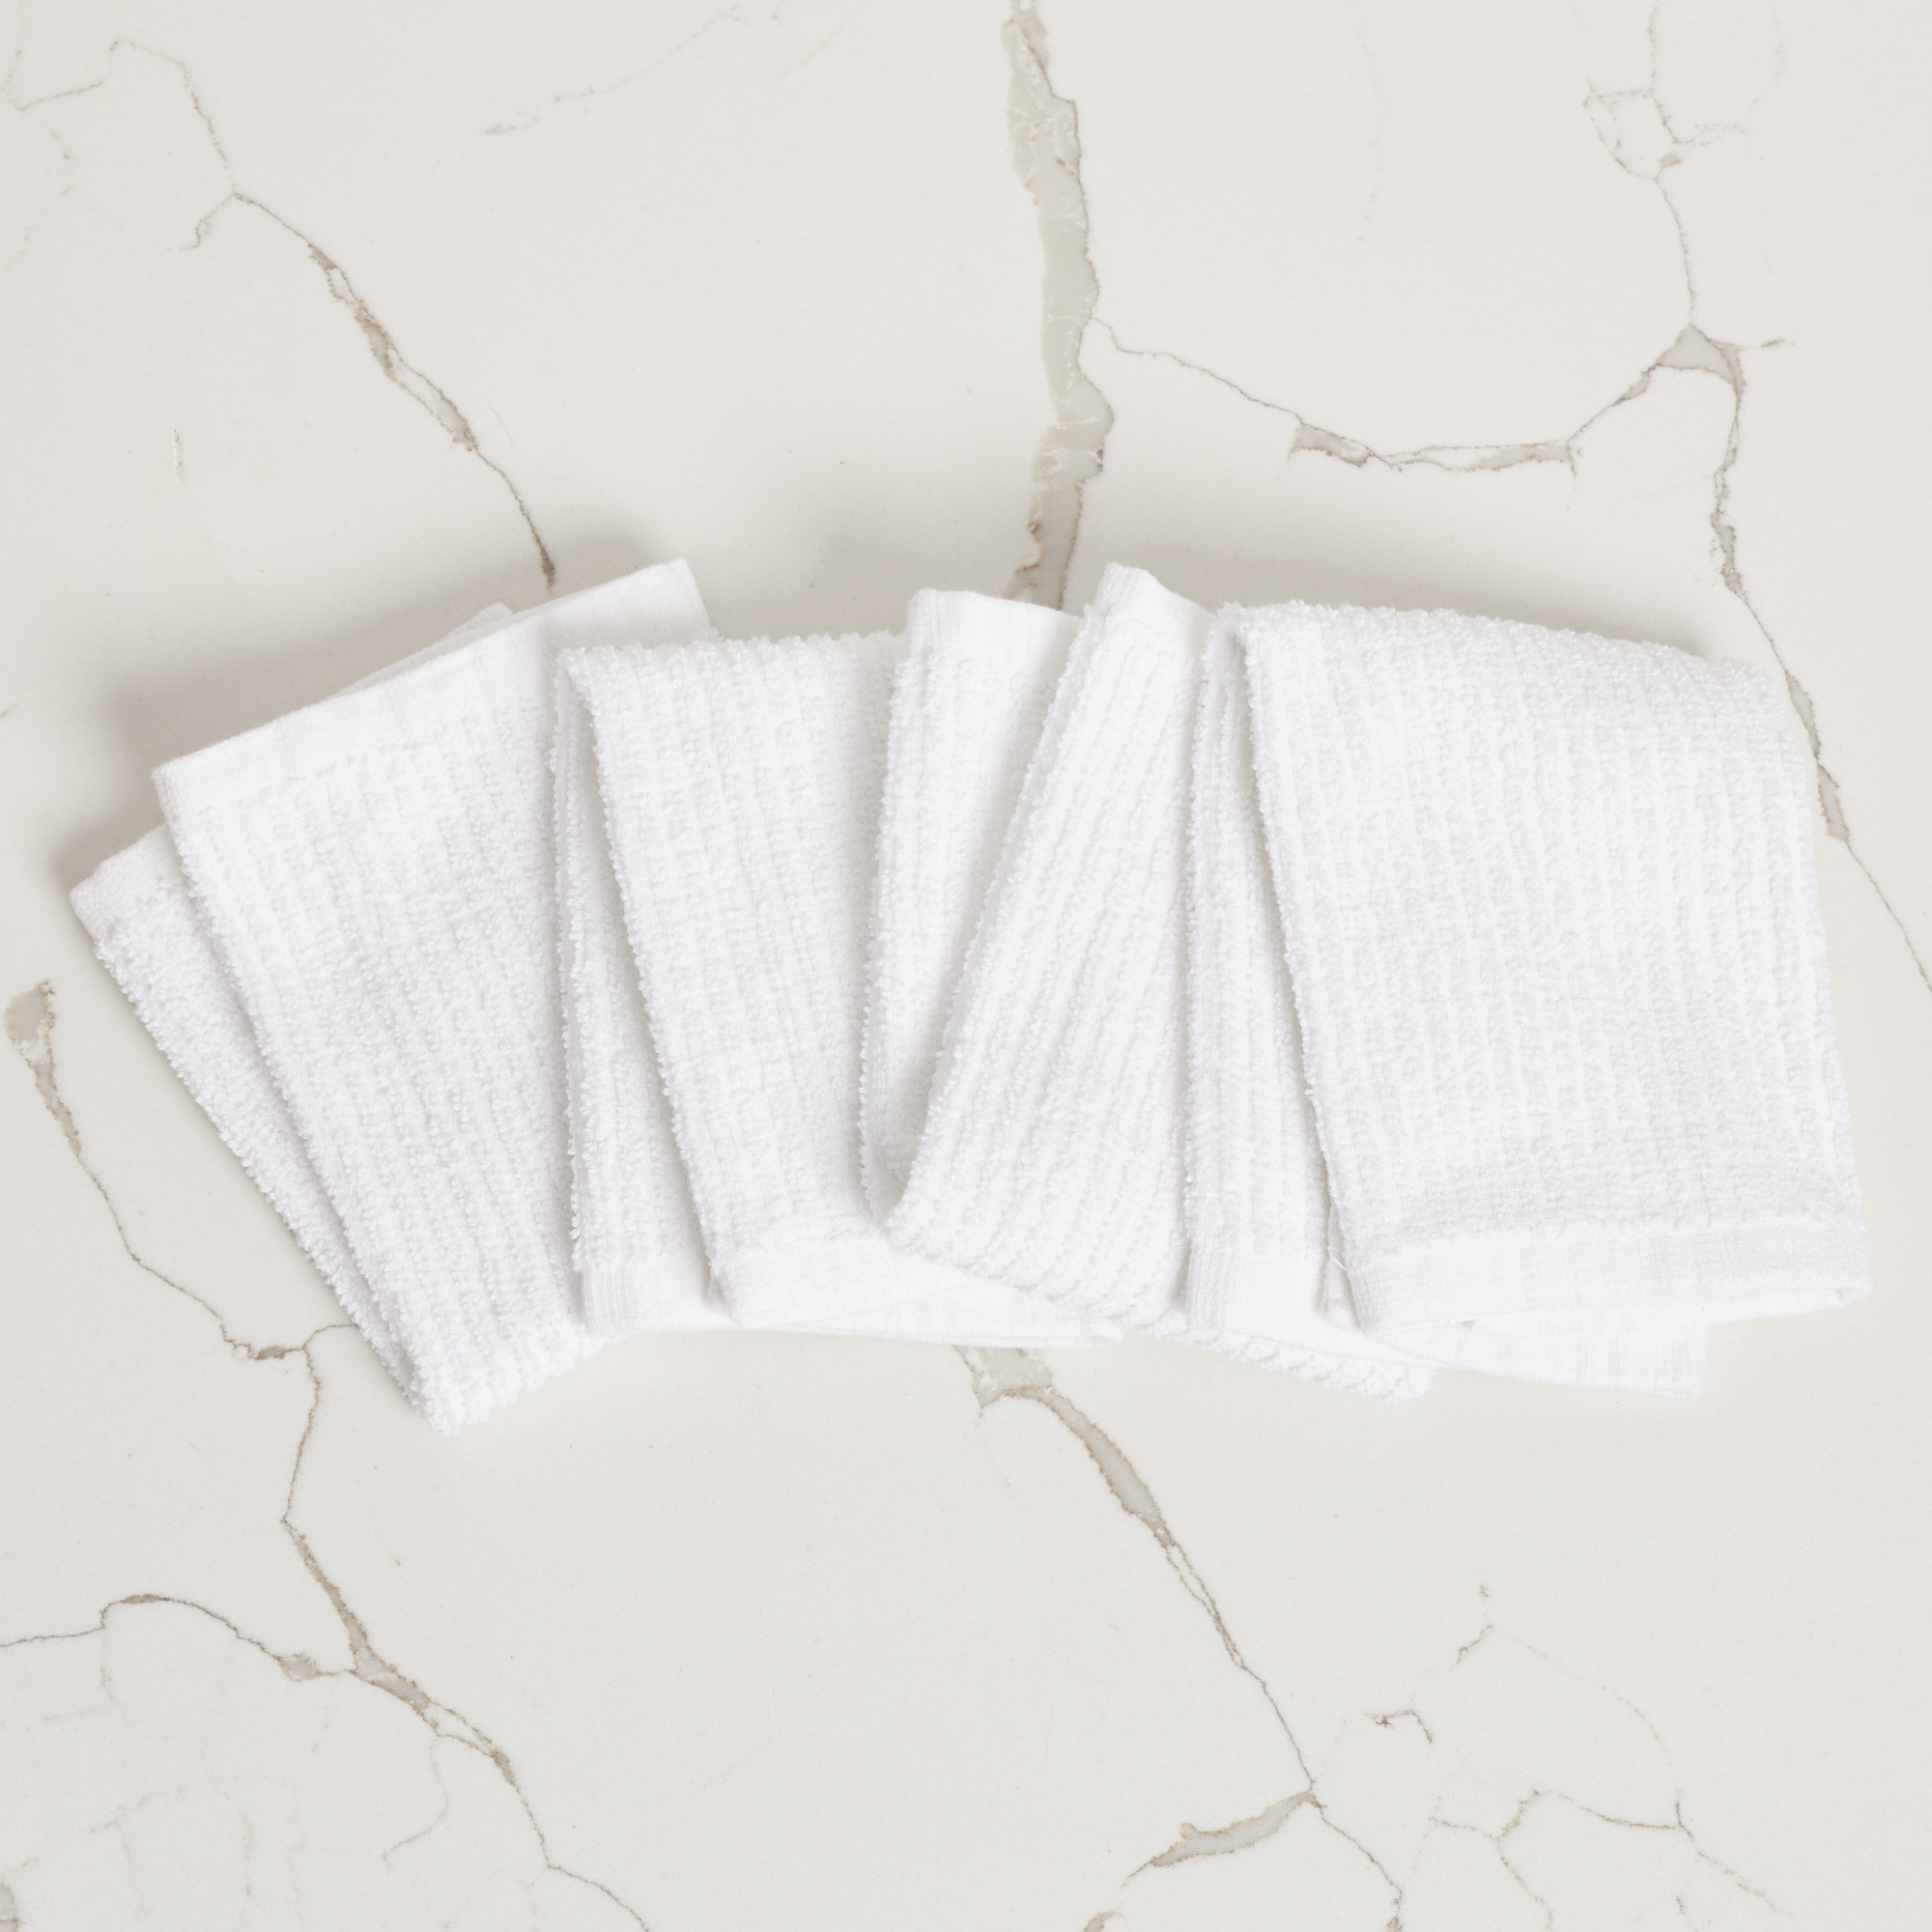 White Machine Washable Bar Mop Cleaning Kitchen Dish Cloth Towels,100% Cotton Everyday Kitchen Basic Utility Bar Mop Dishcloth Set of 12